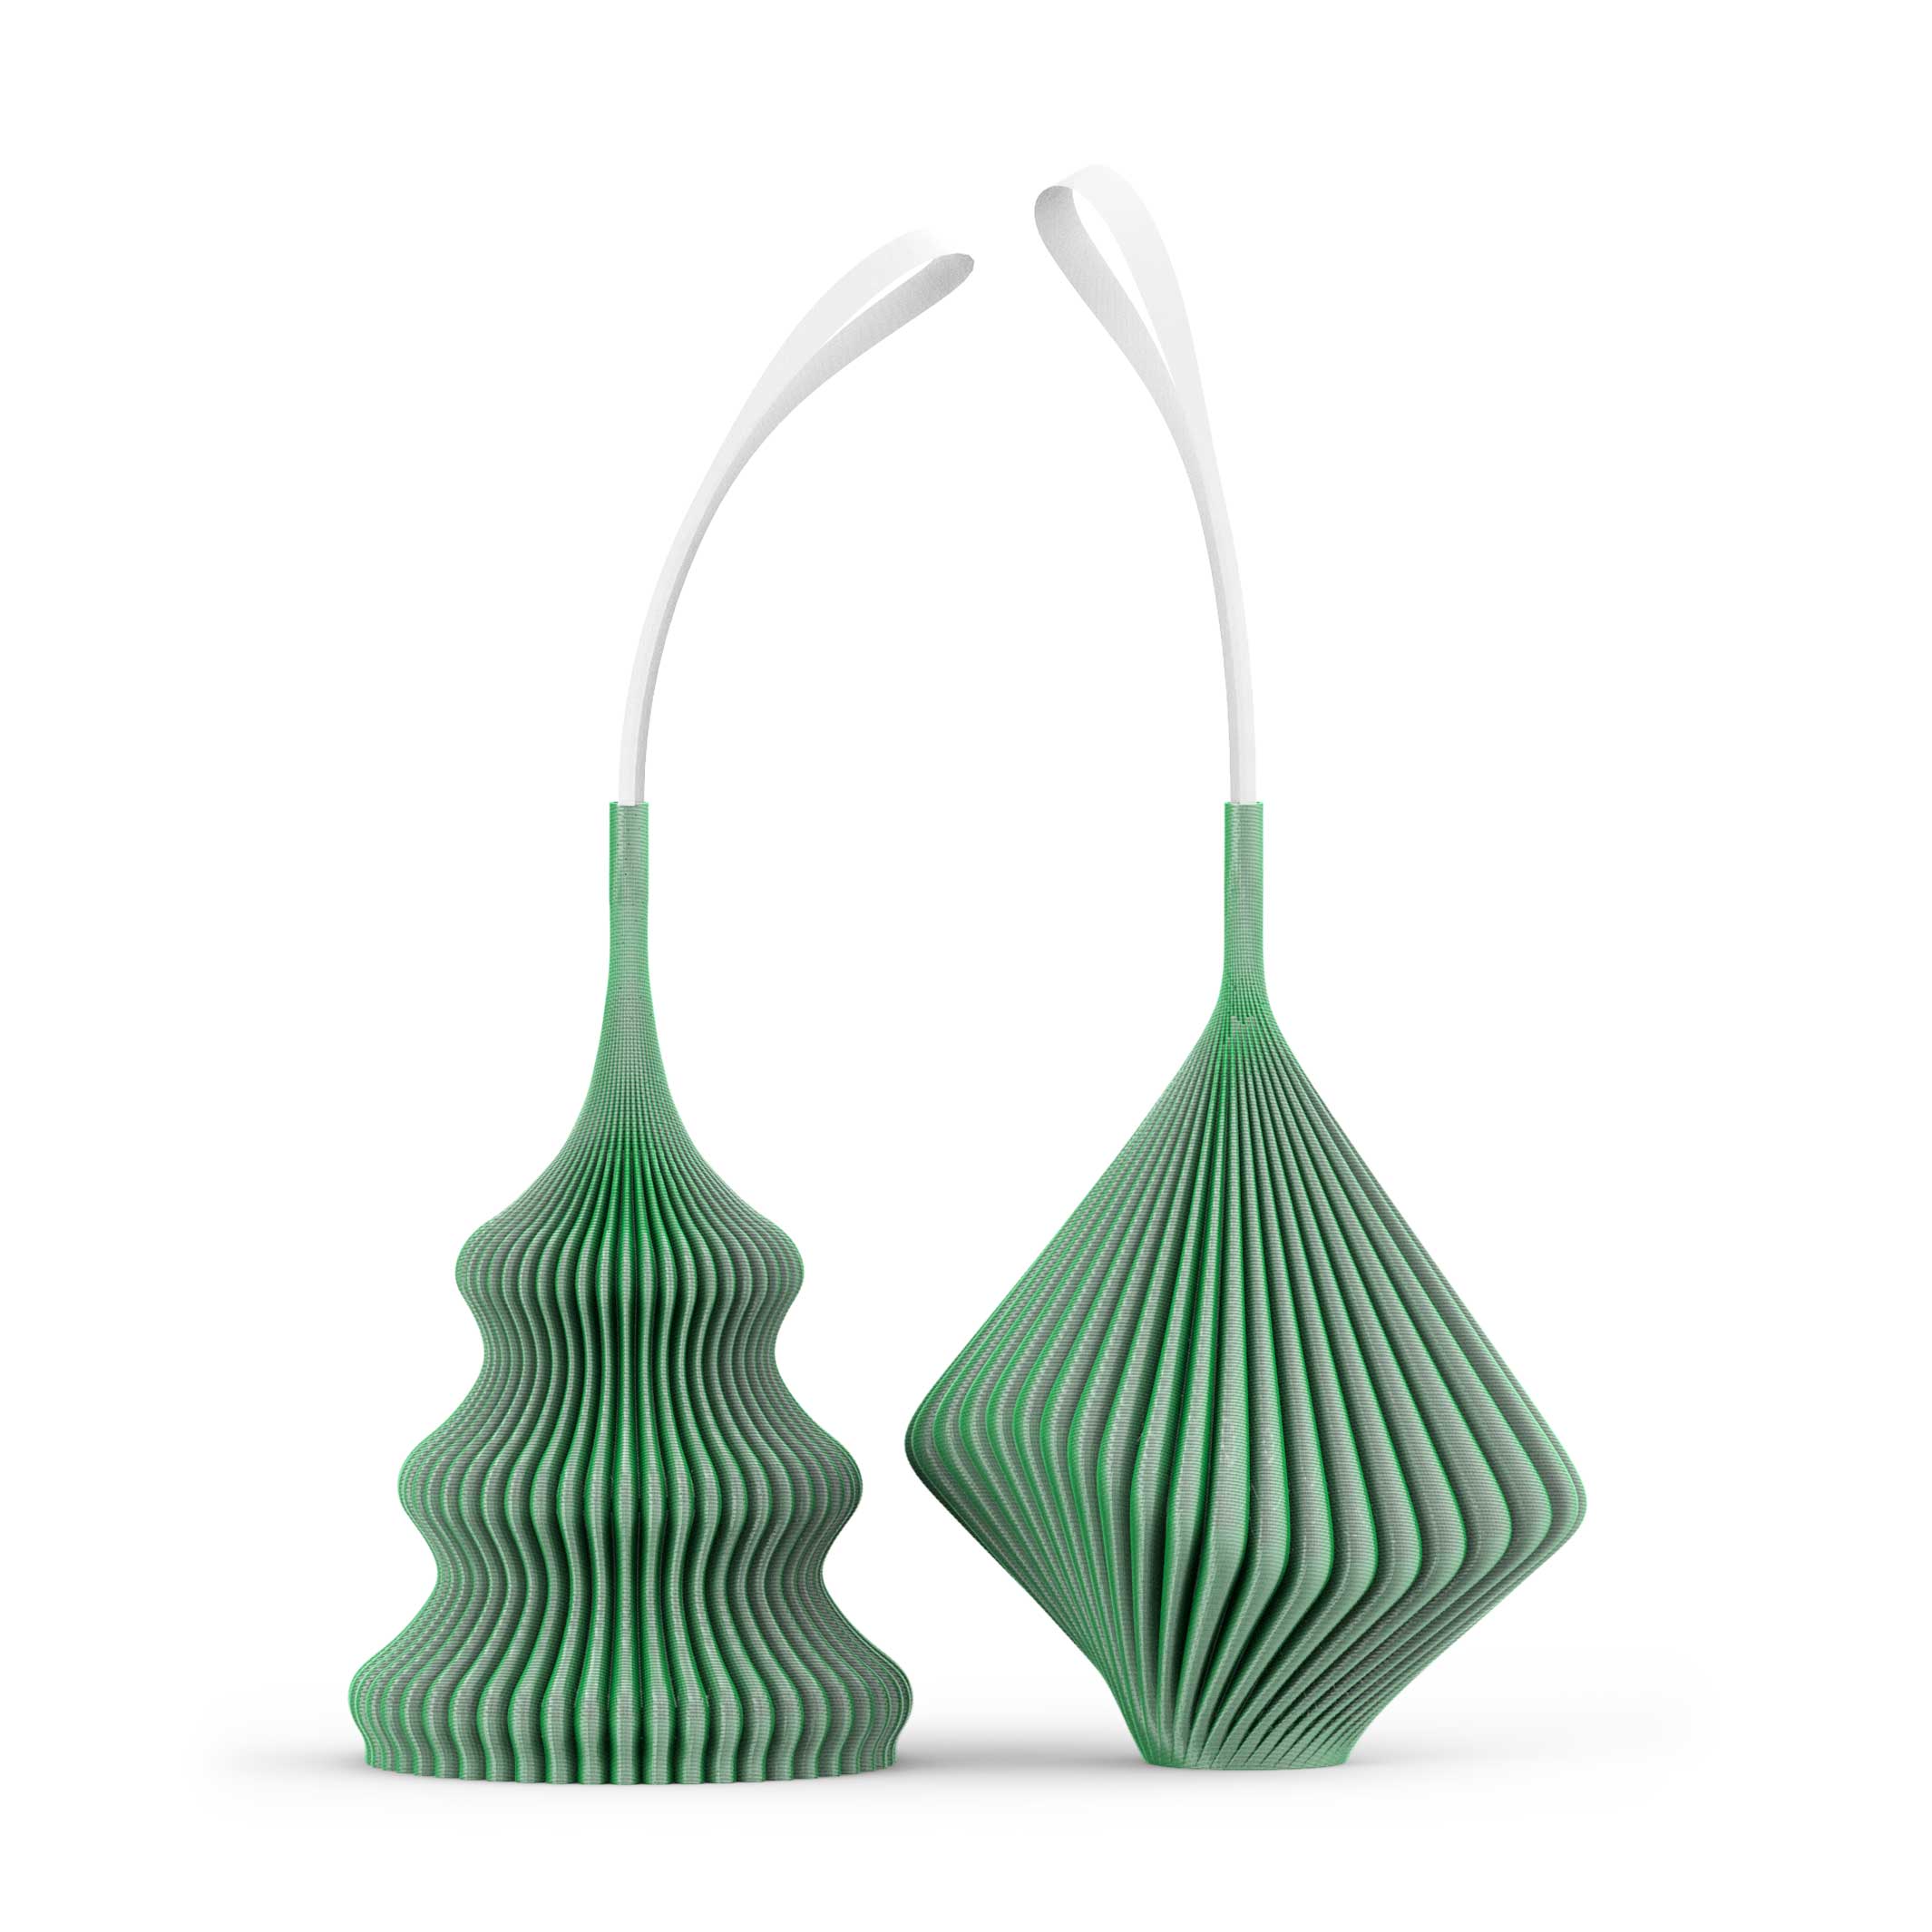 ZAYL & BLOZ Peppermint Green | 3D printed CHRISTMAS TREE ORNAMENTS | Set of 2 | Sheyn